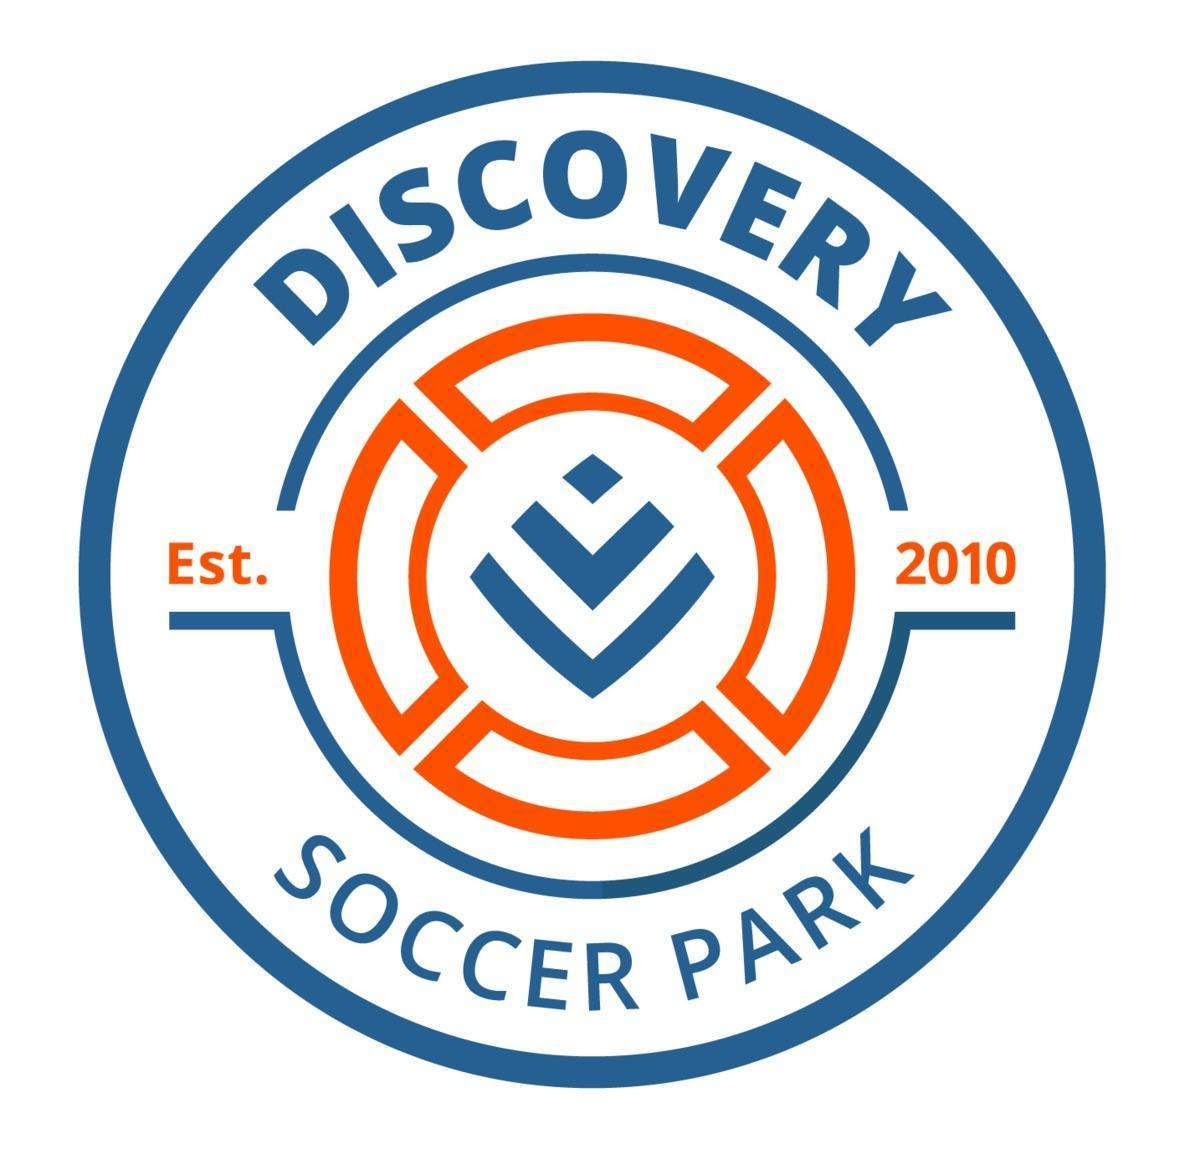 Discovery Soccer Park Sport in Sandton Deals Jozikids